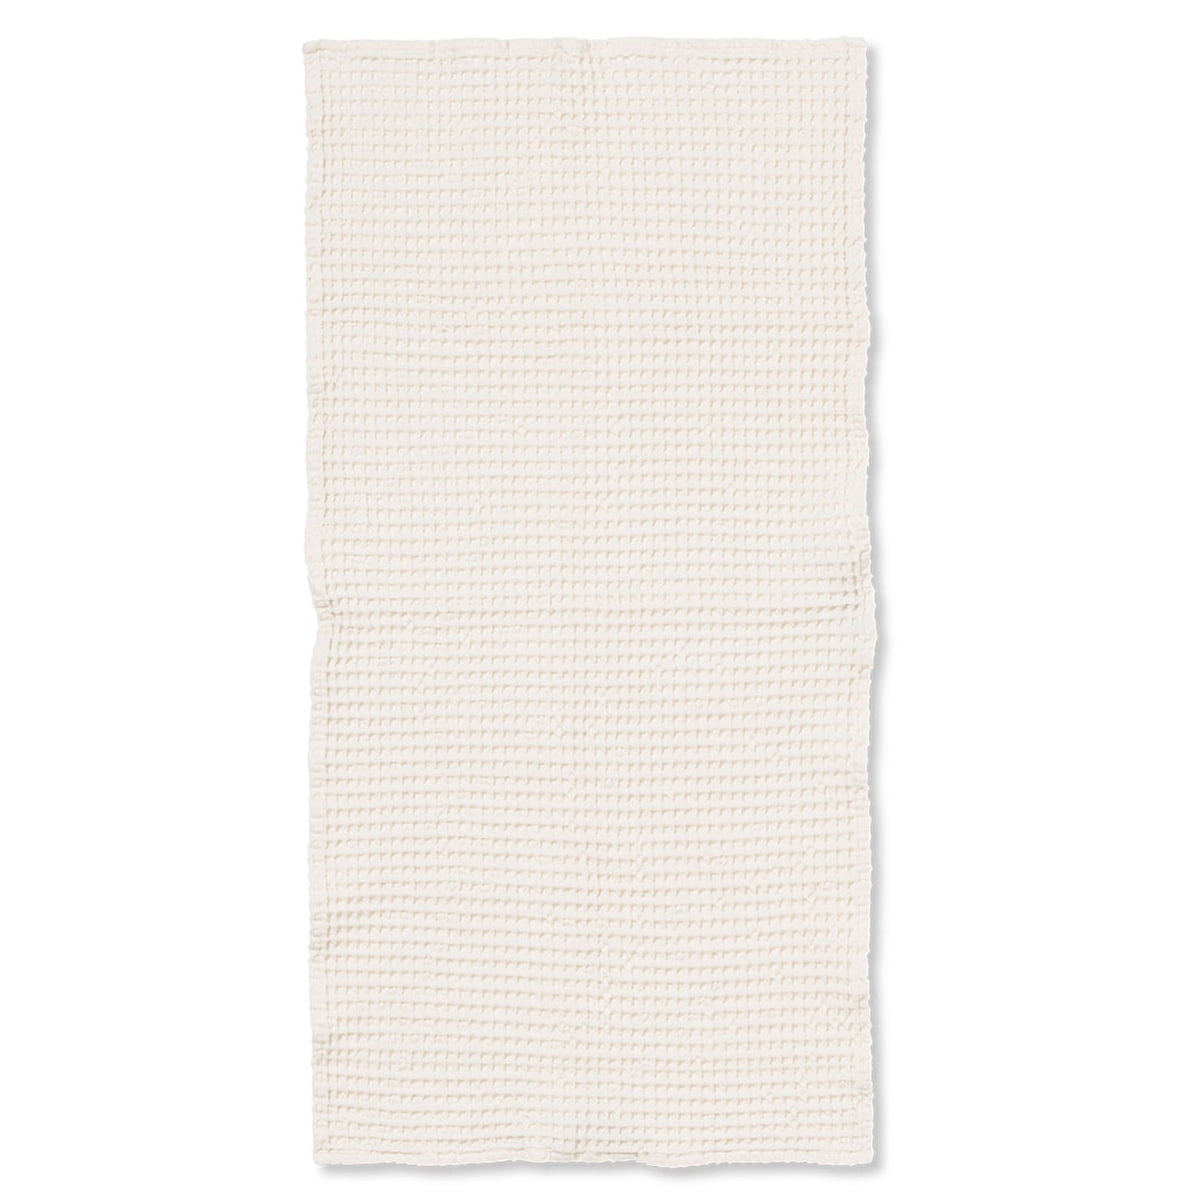 ferm living - organic drap de bain, 70 x 140 cm, blanc